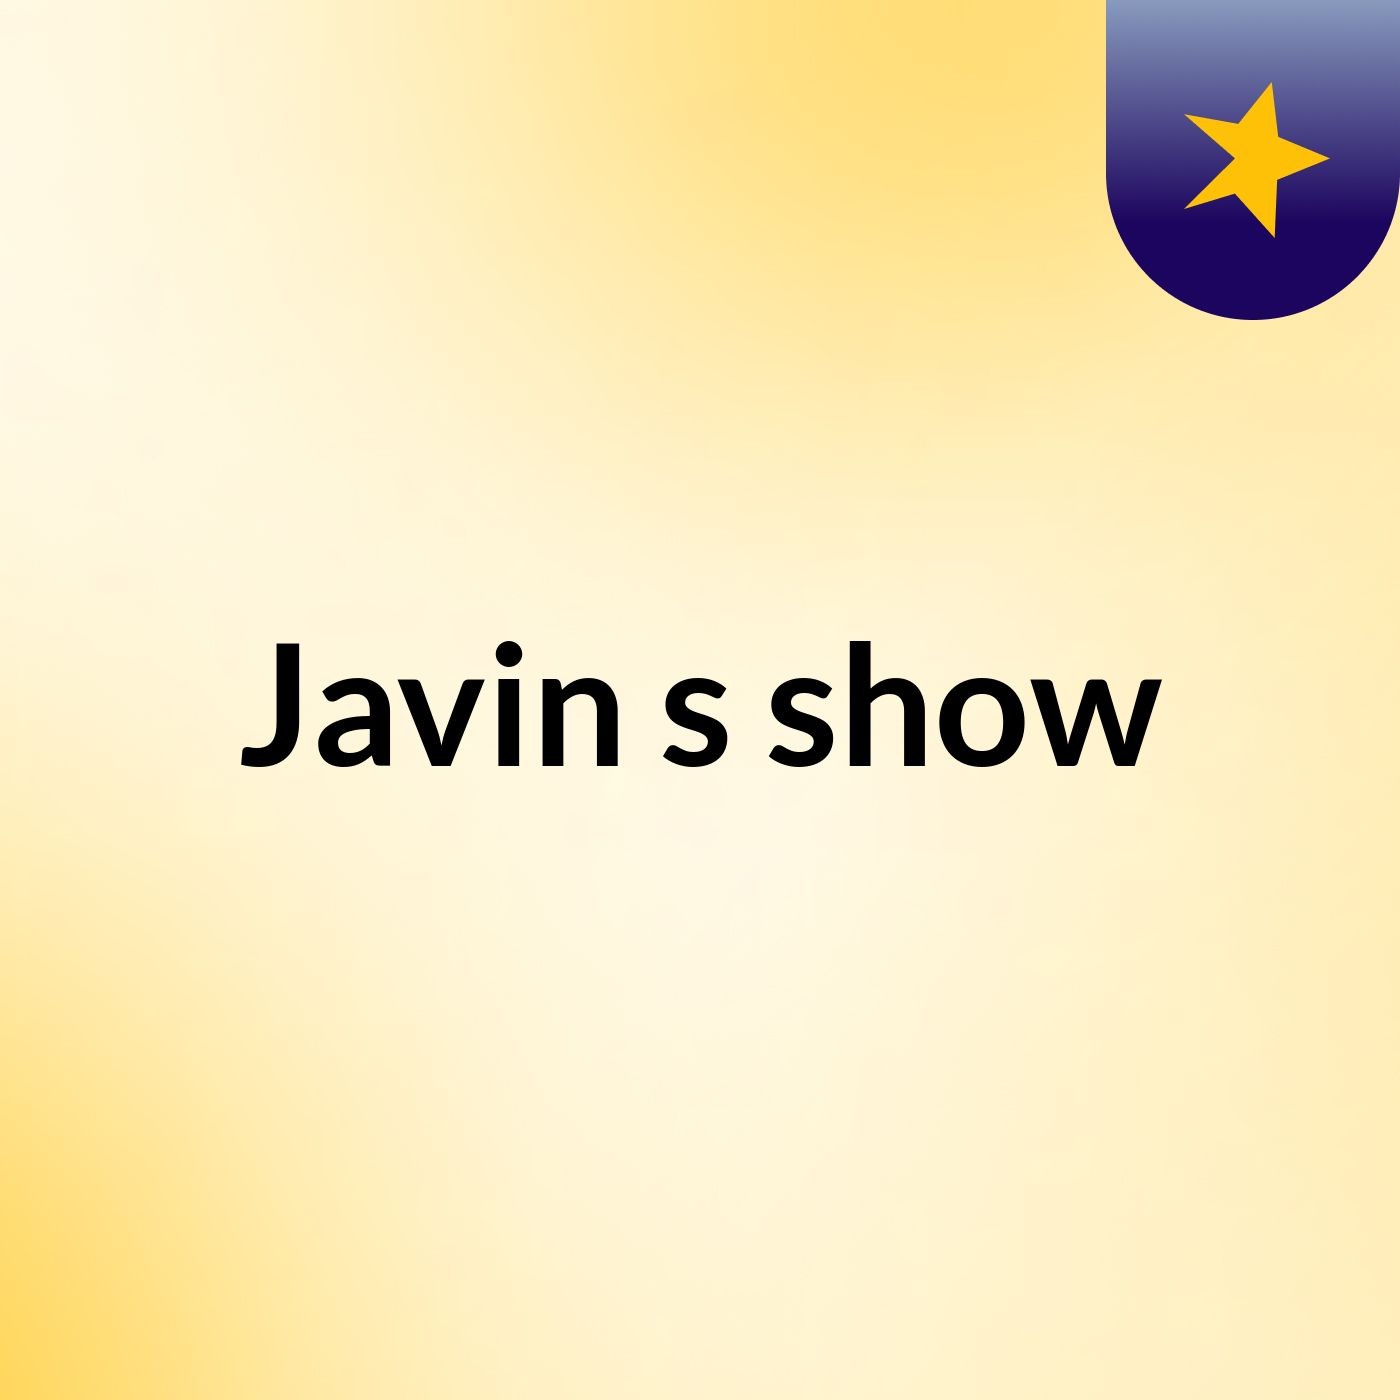 Javin's show